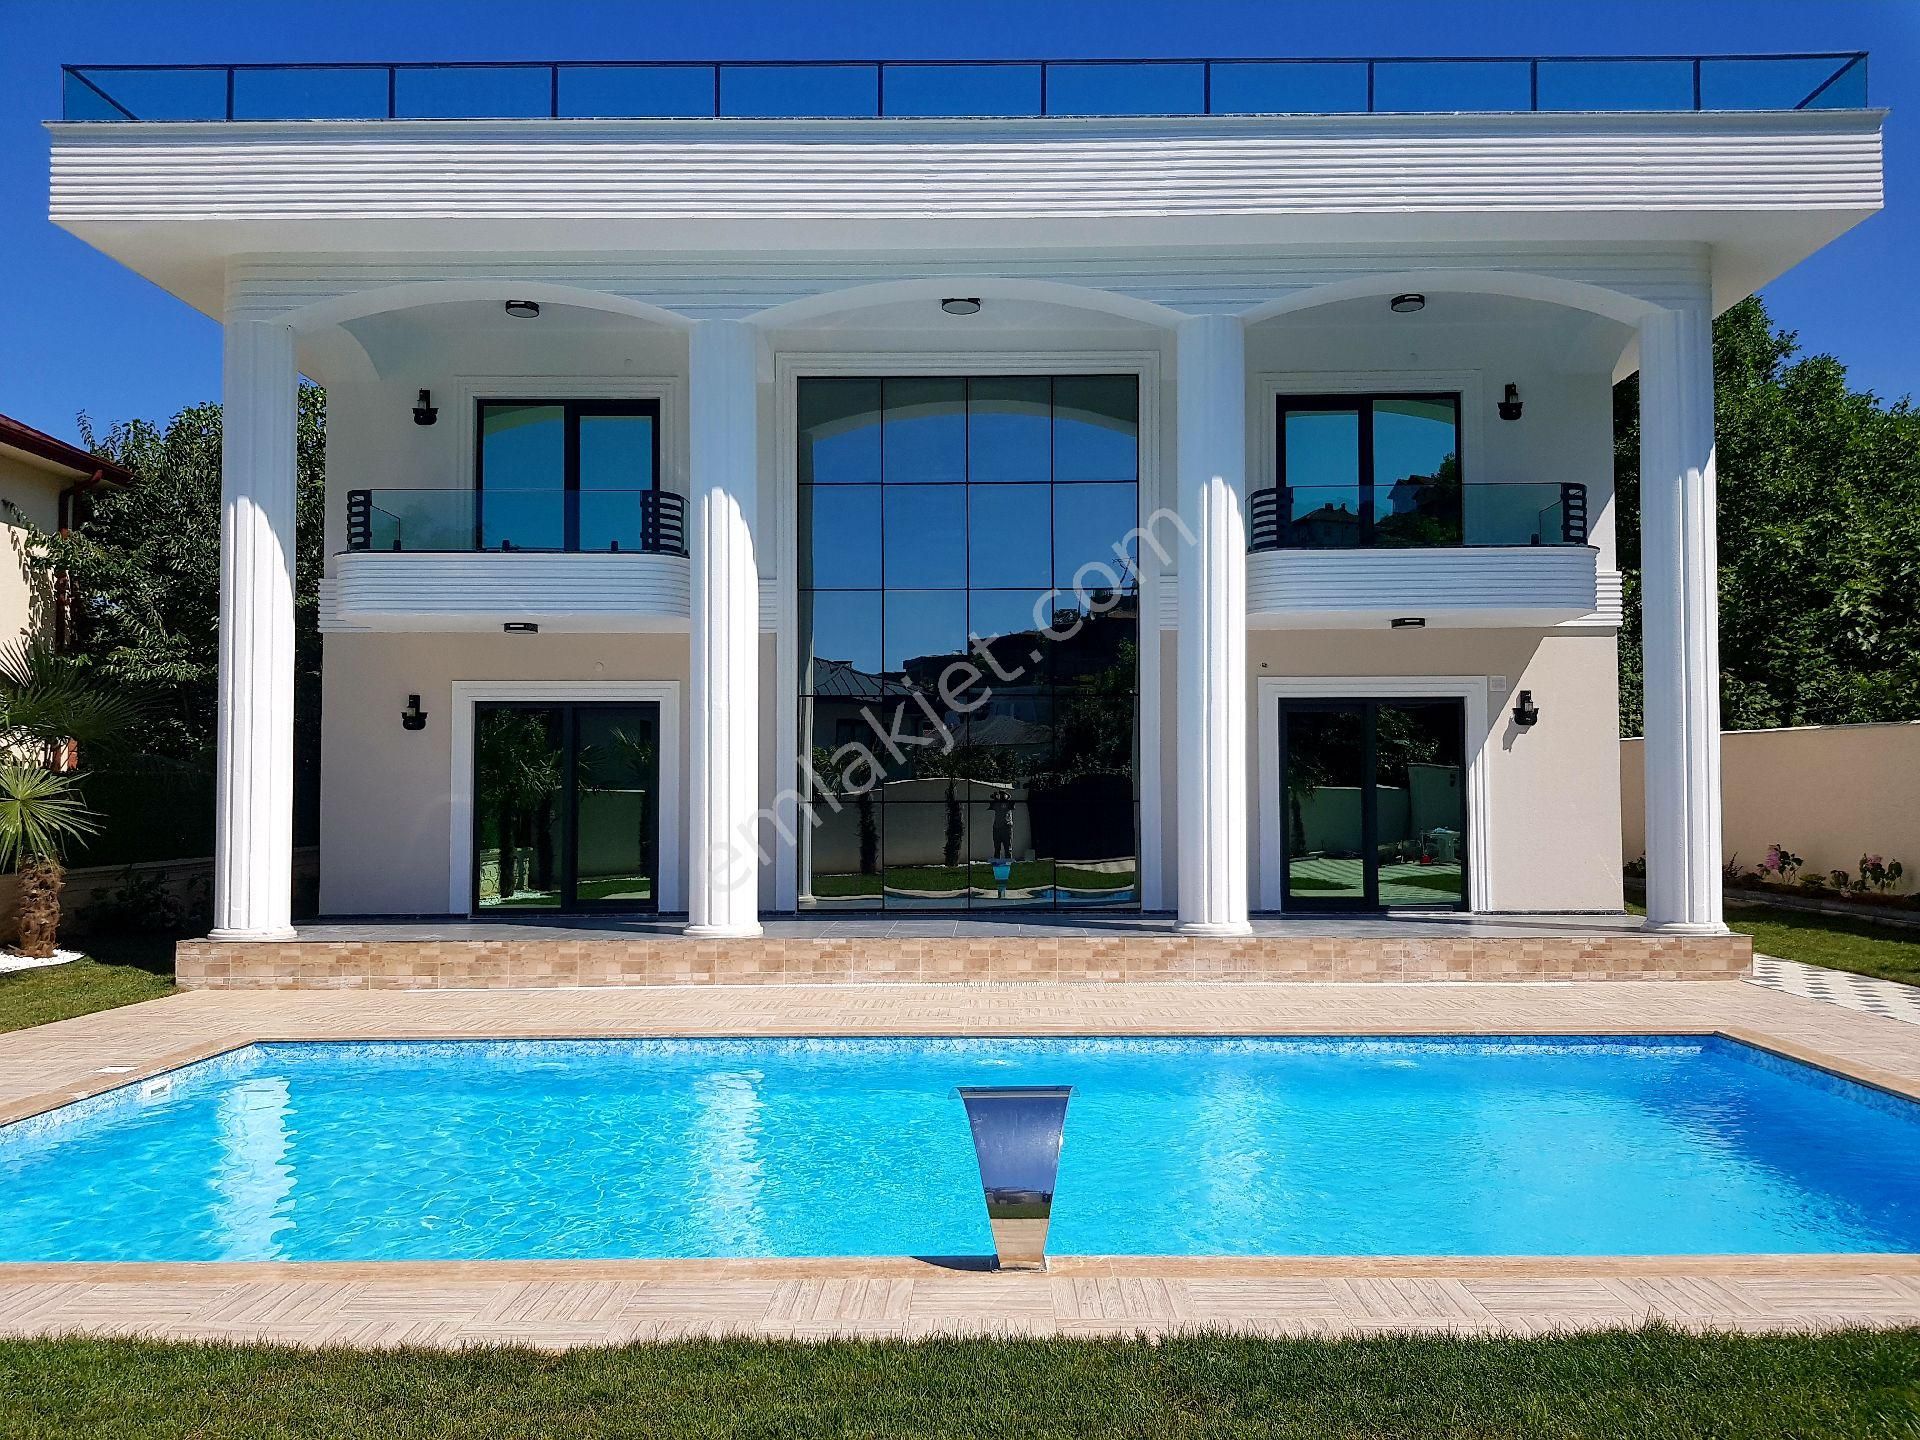 Sapanca Güldibi Satılık Villa MÜSTAKİL LÜKS VİLLA 